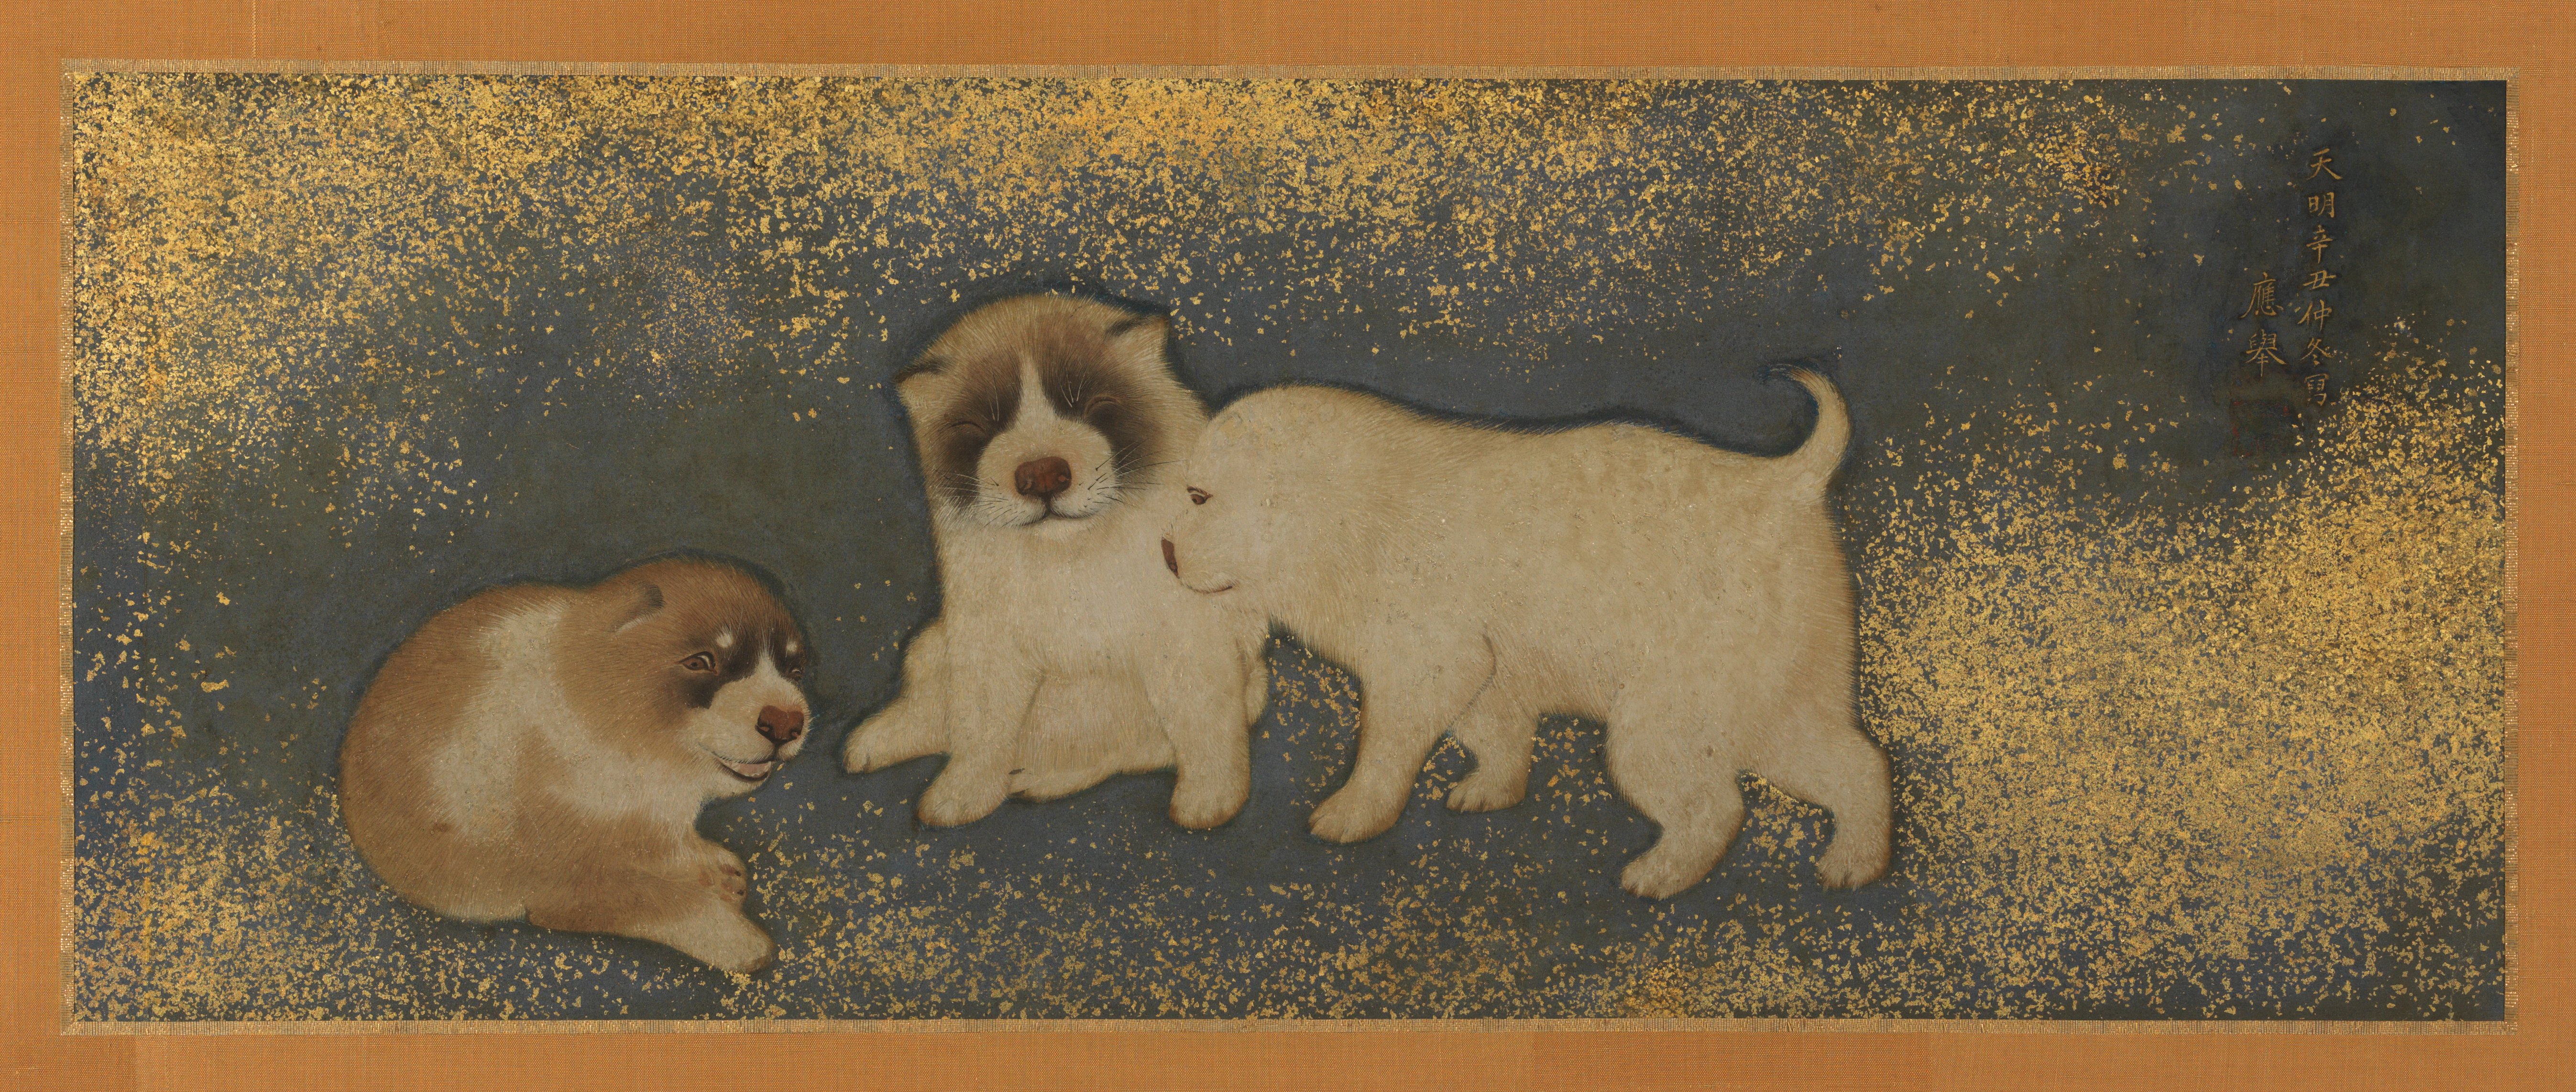 Puppies by Maruyama Ōkyo - 1781 - 24.45 × 63.18 cm Minneapolis Institute of Art